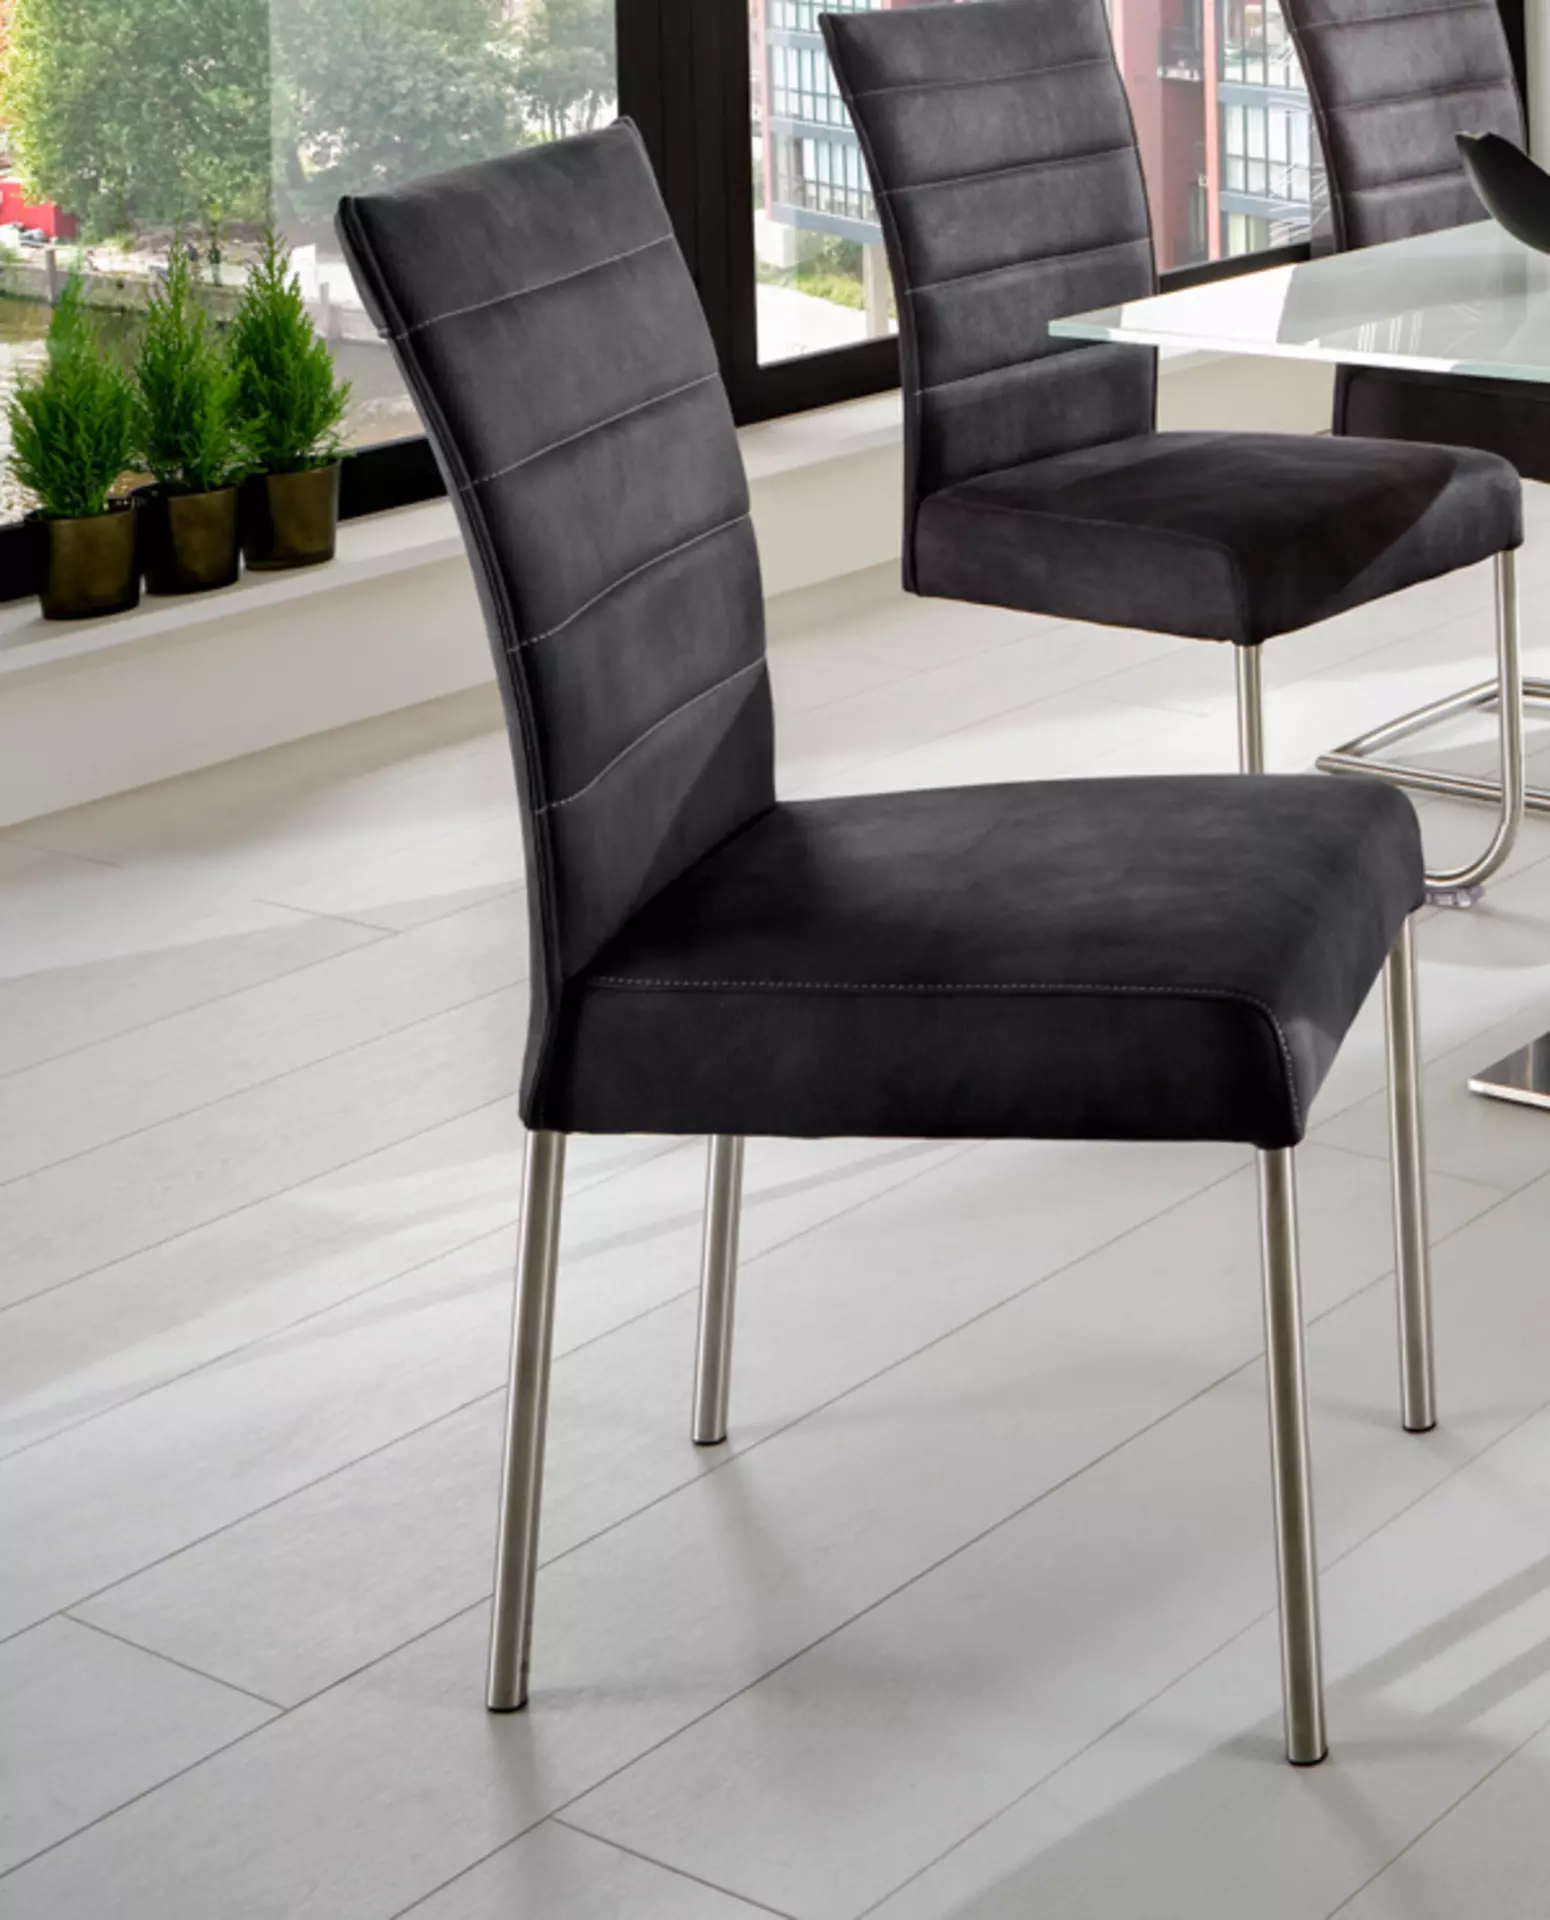 4-Fuß-Stuhl 1811-02-439 Niehoff Sitzmöbel Metall 46 x 99 x 59 cm